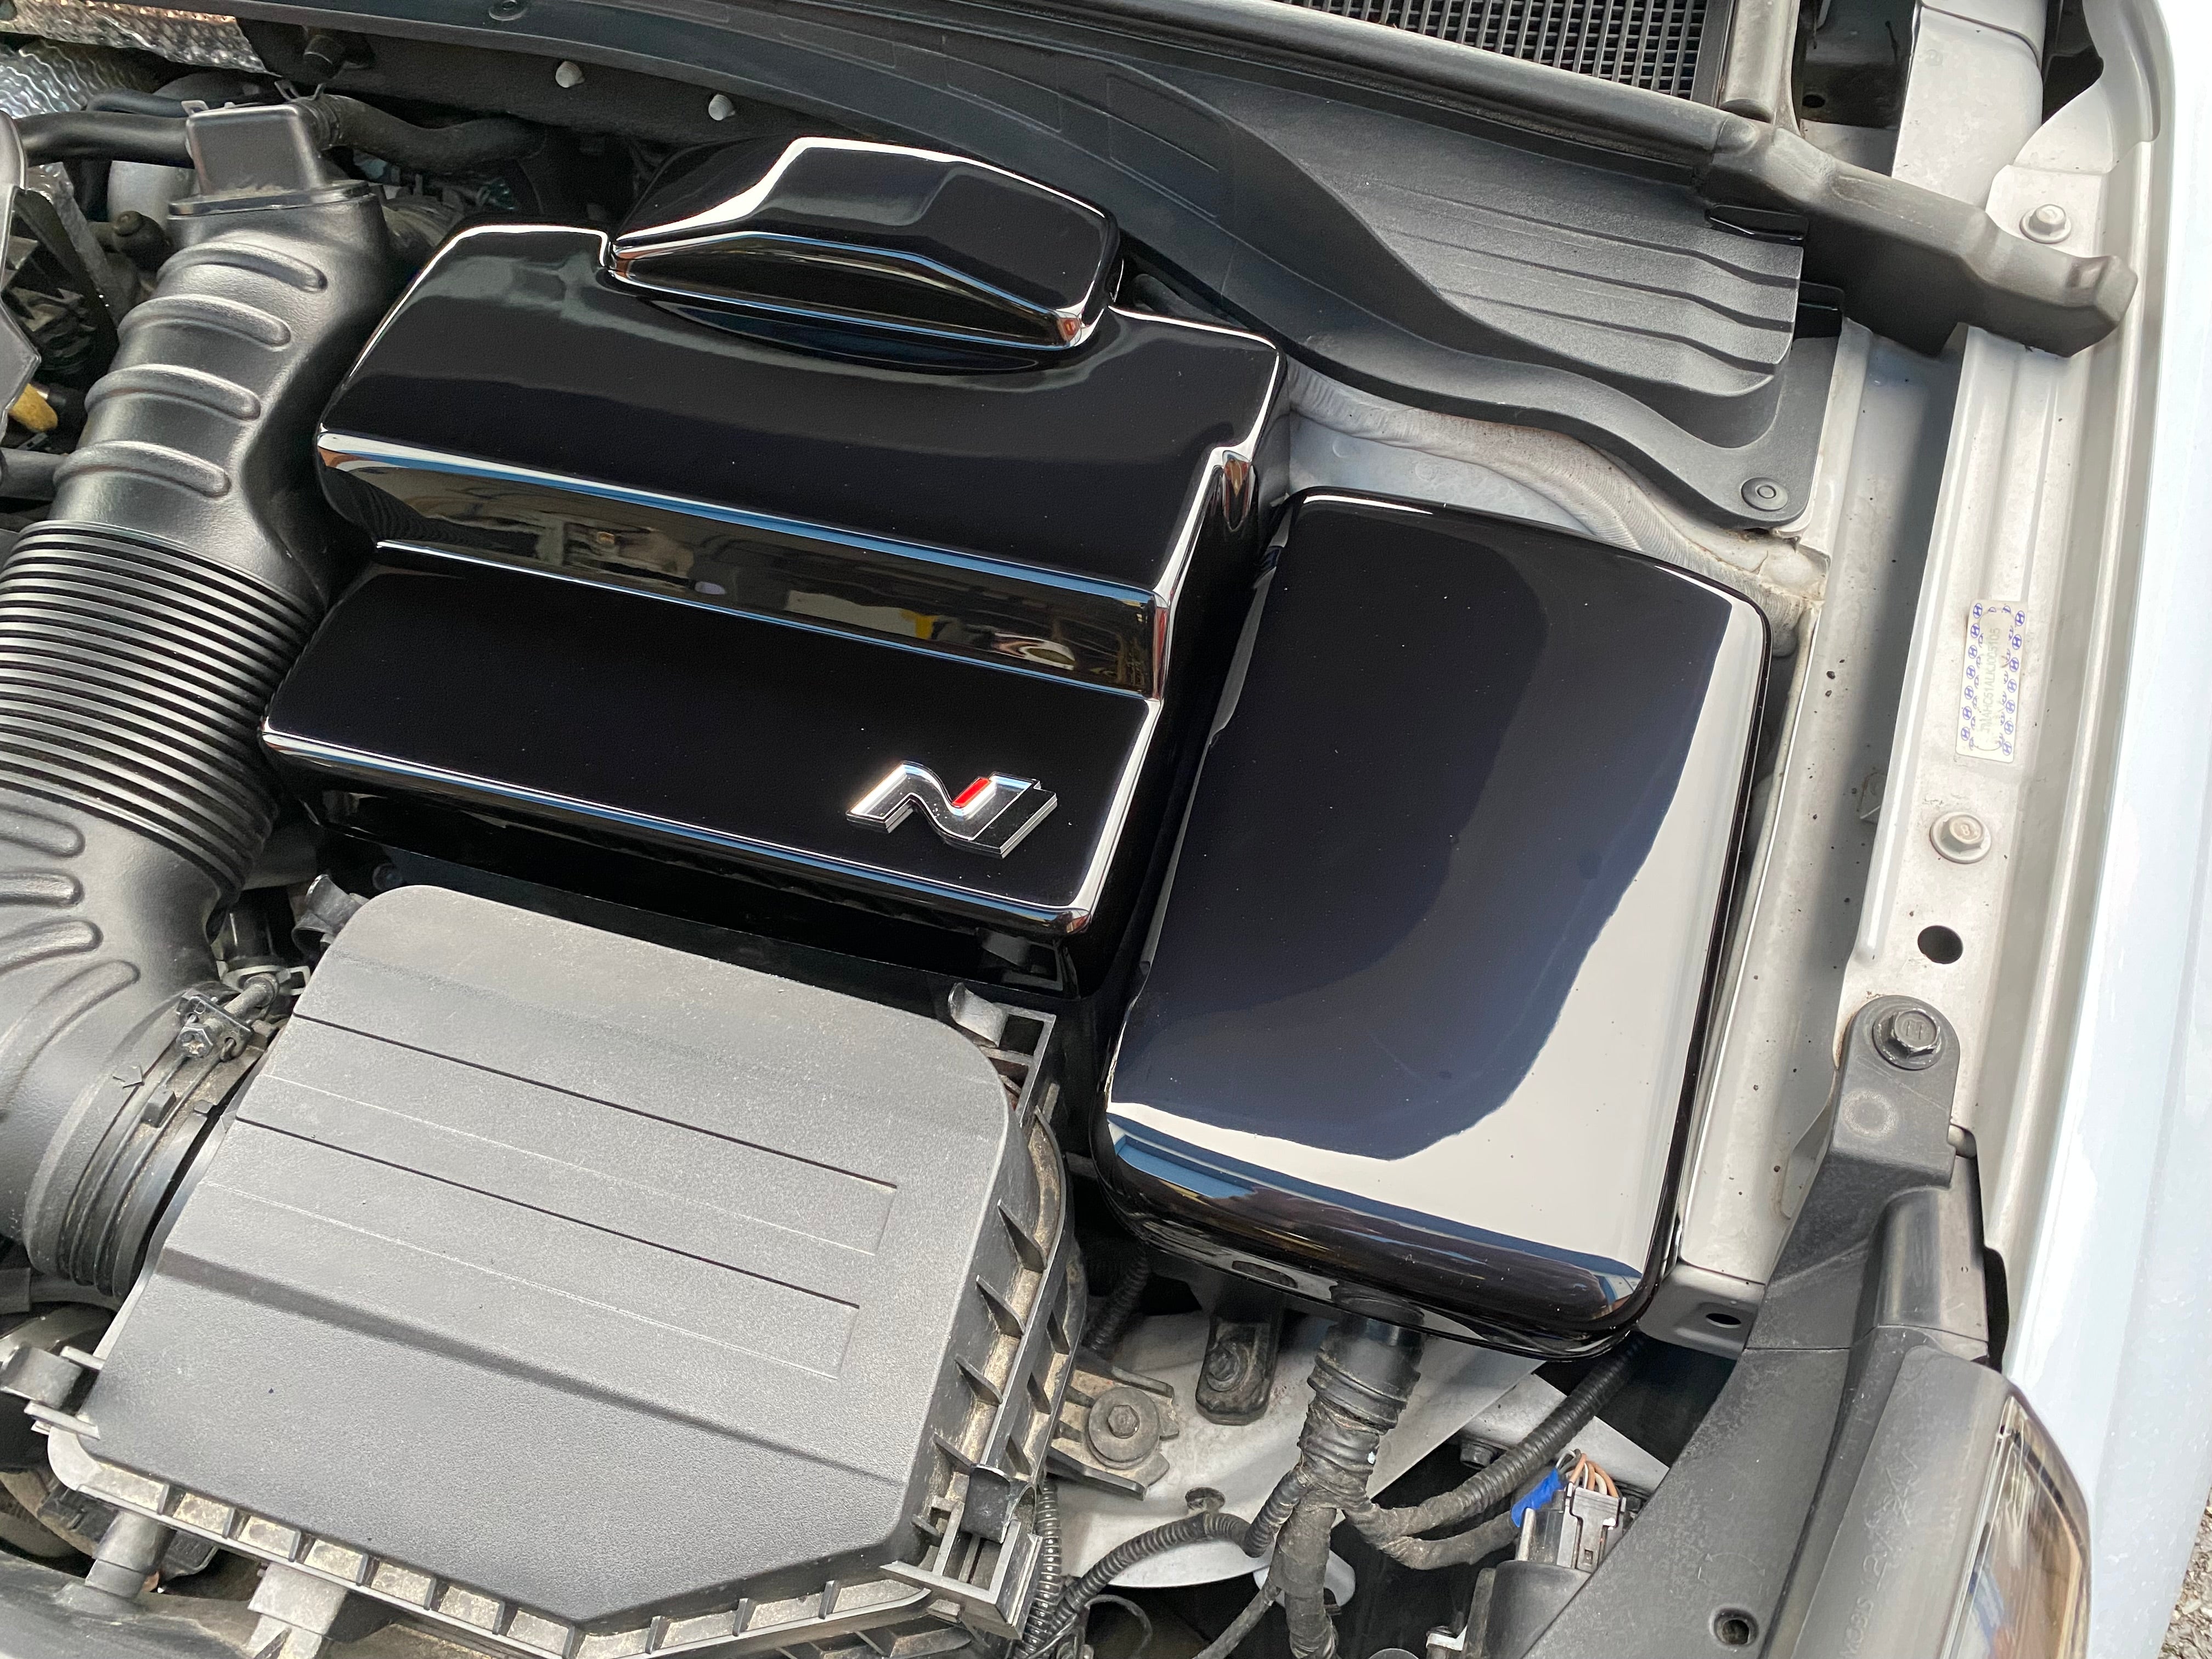 Proform Fuse Box Cover - Hyundai i30 / Veloster N (Plastic Finishes)